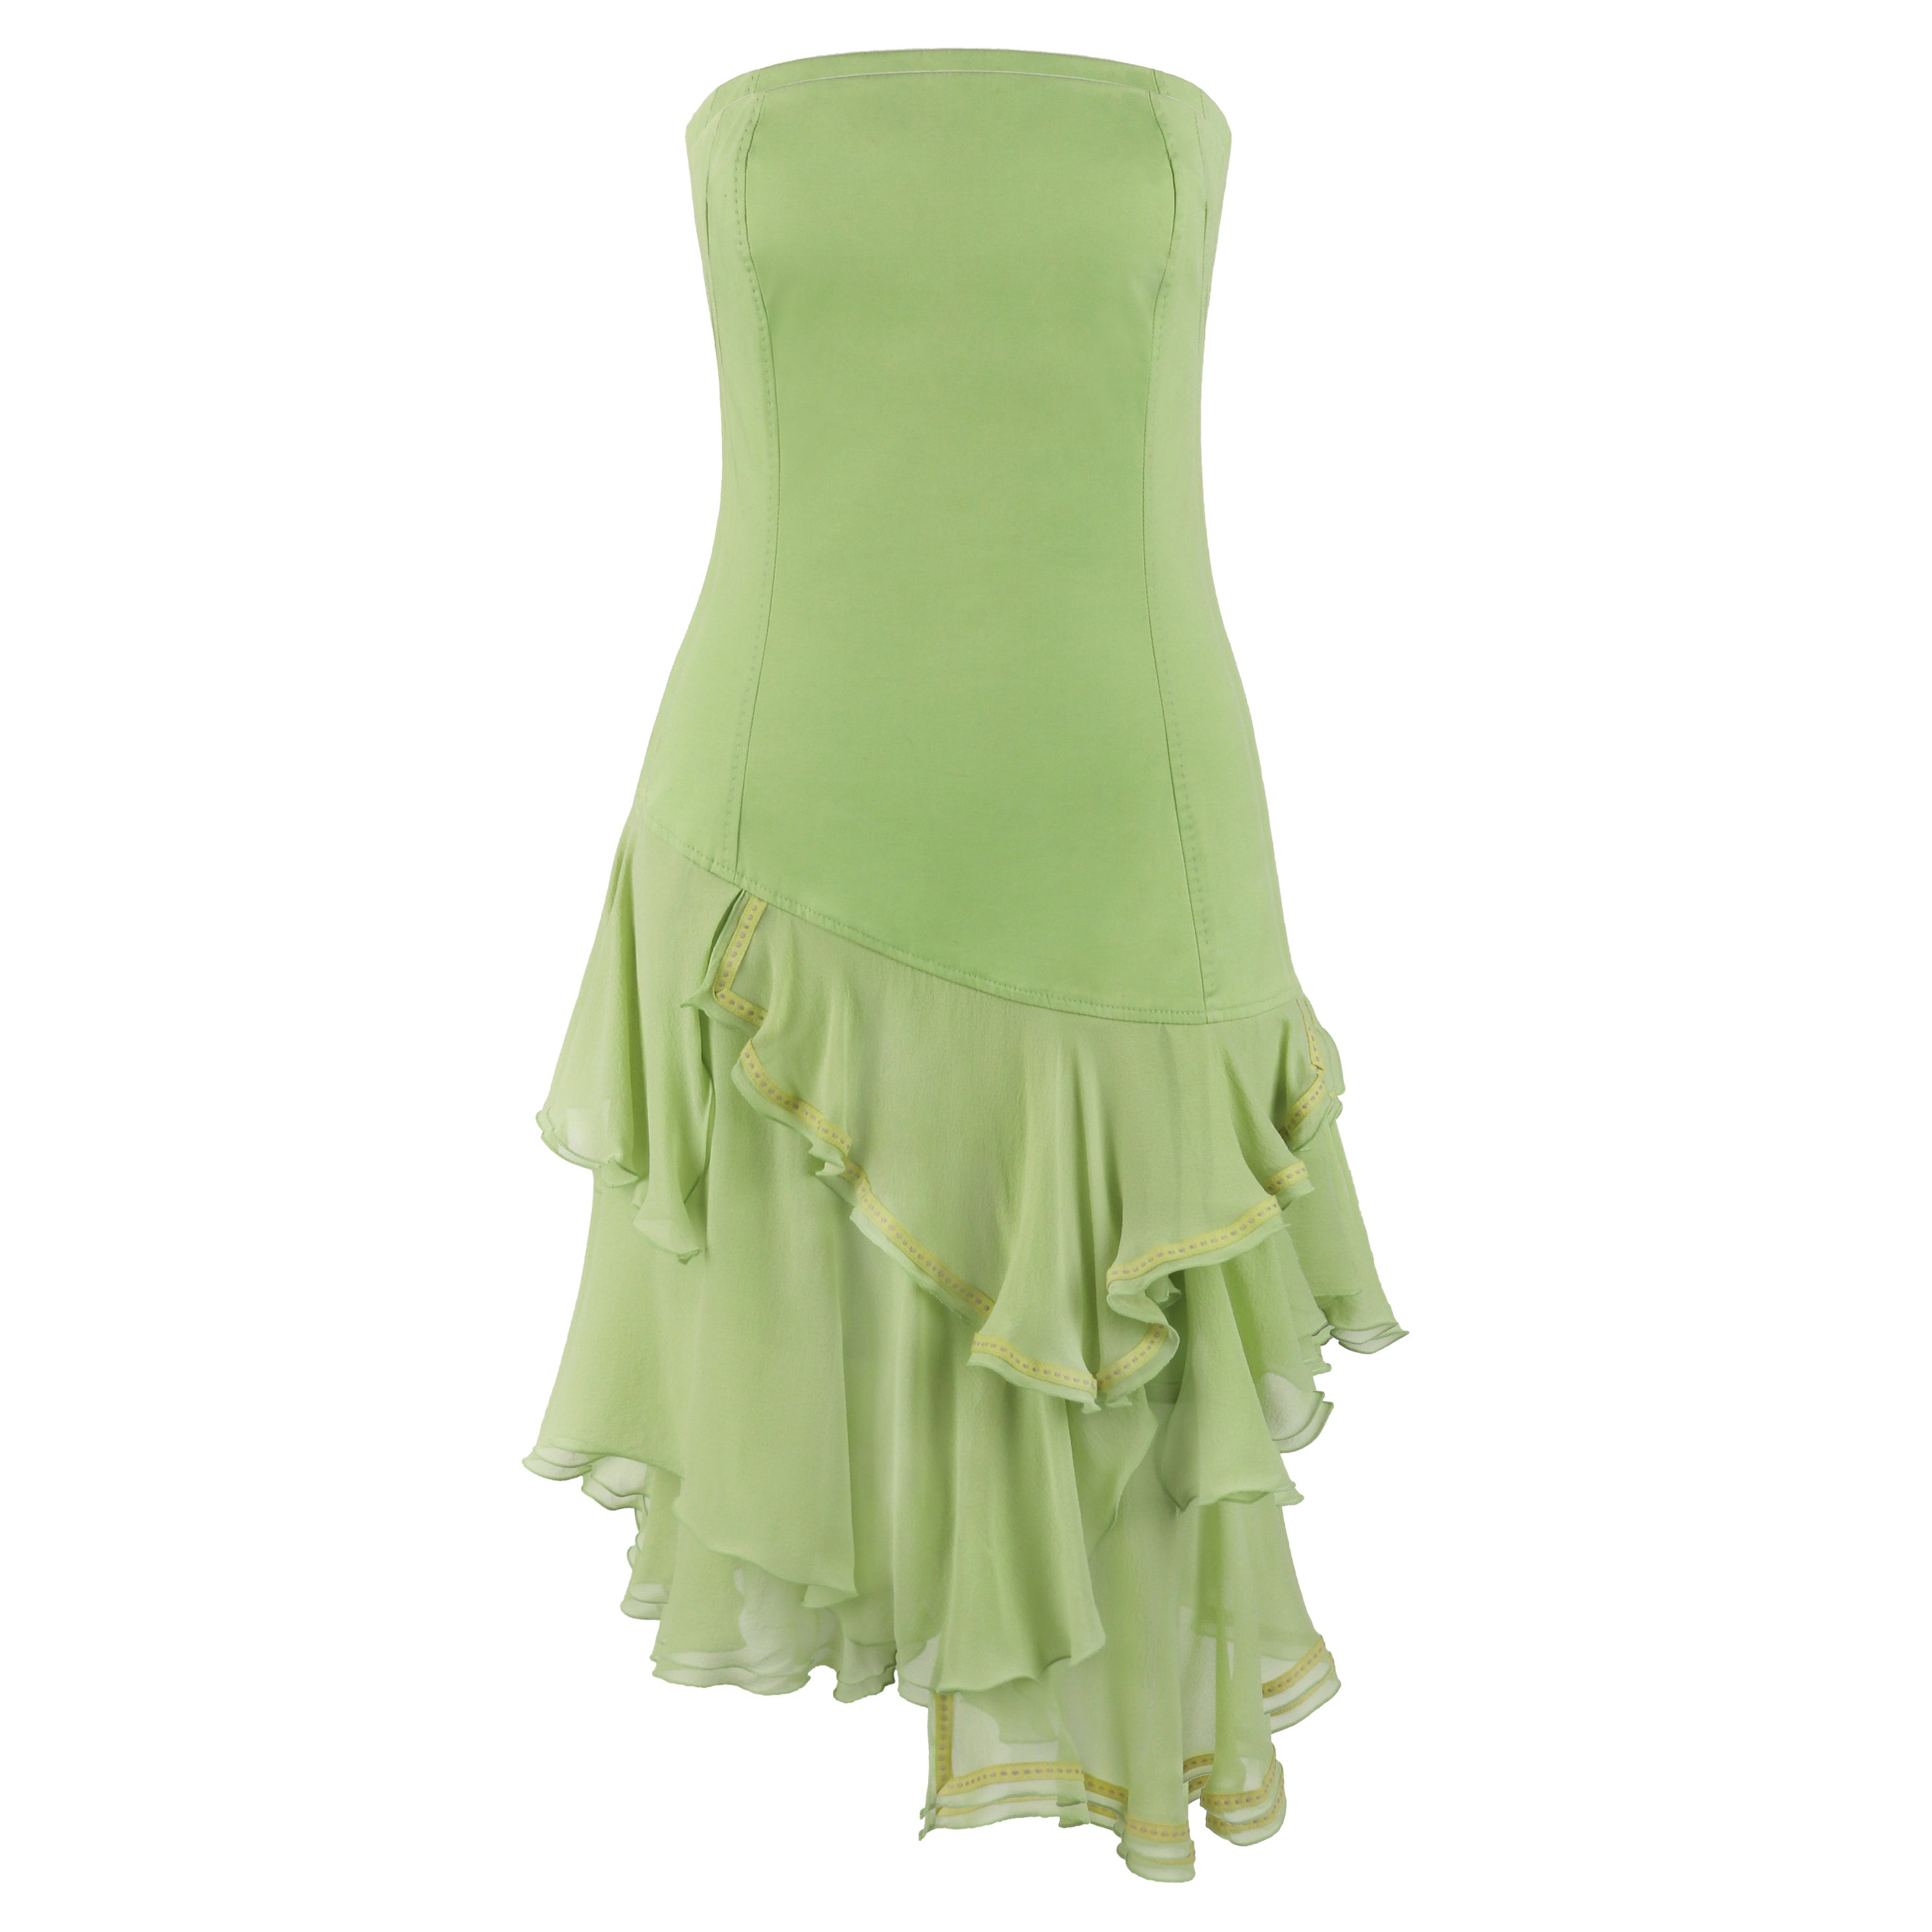 ALEXANDER McQUEEN S/S 1996 “The Hunger” Green Asymmetric Strapless Ruffle Dress For Sale